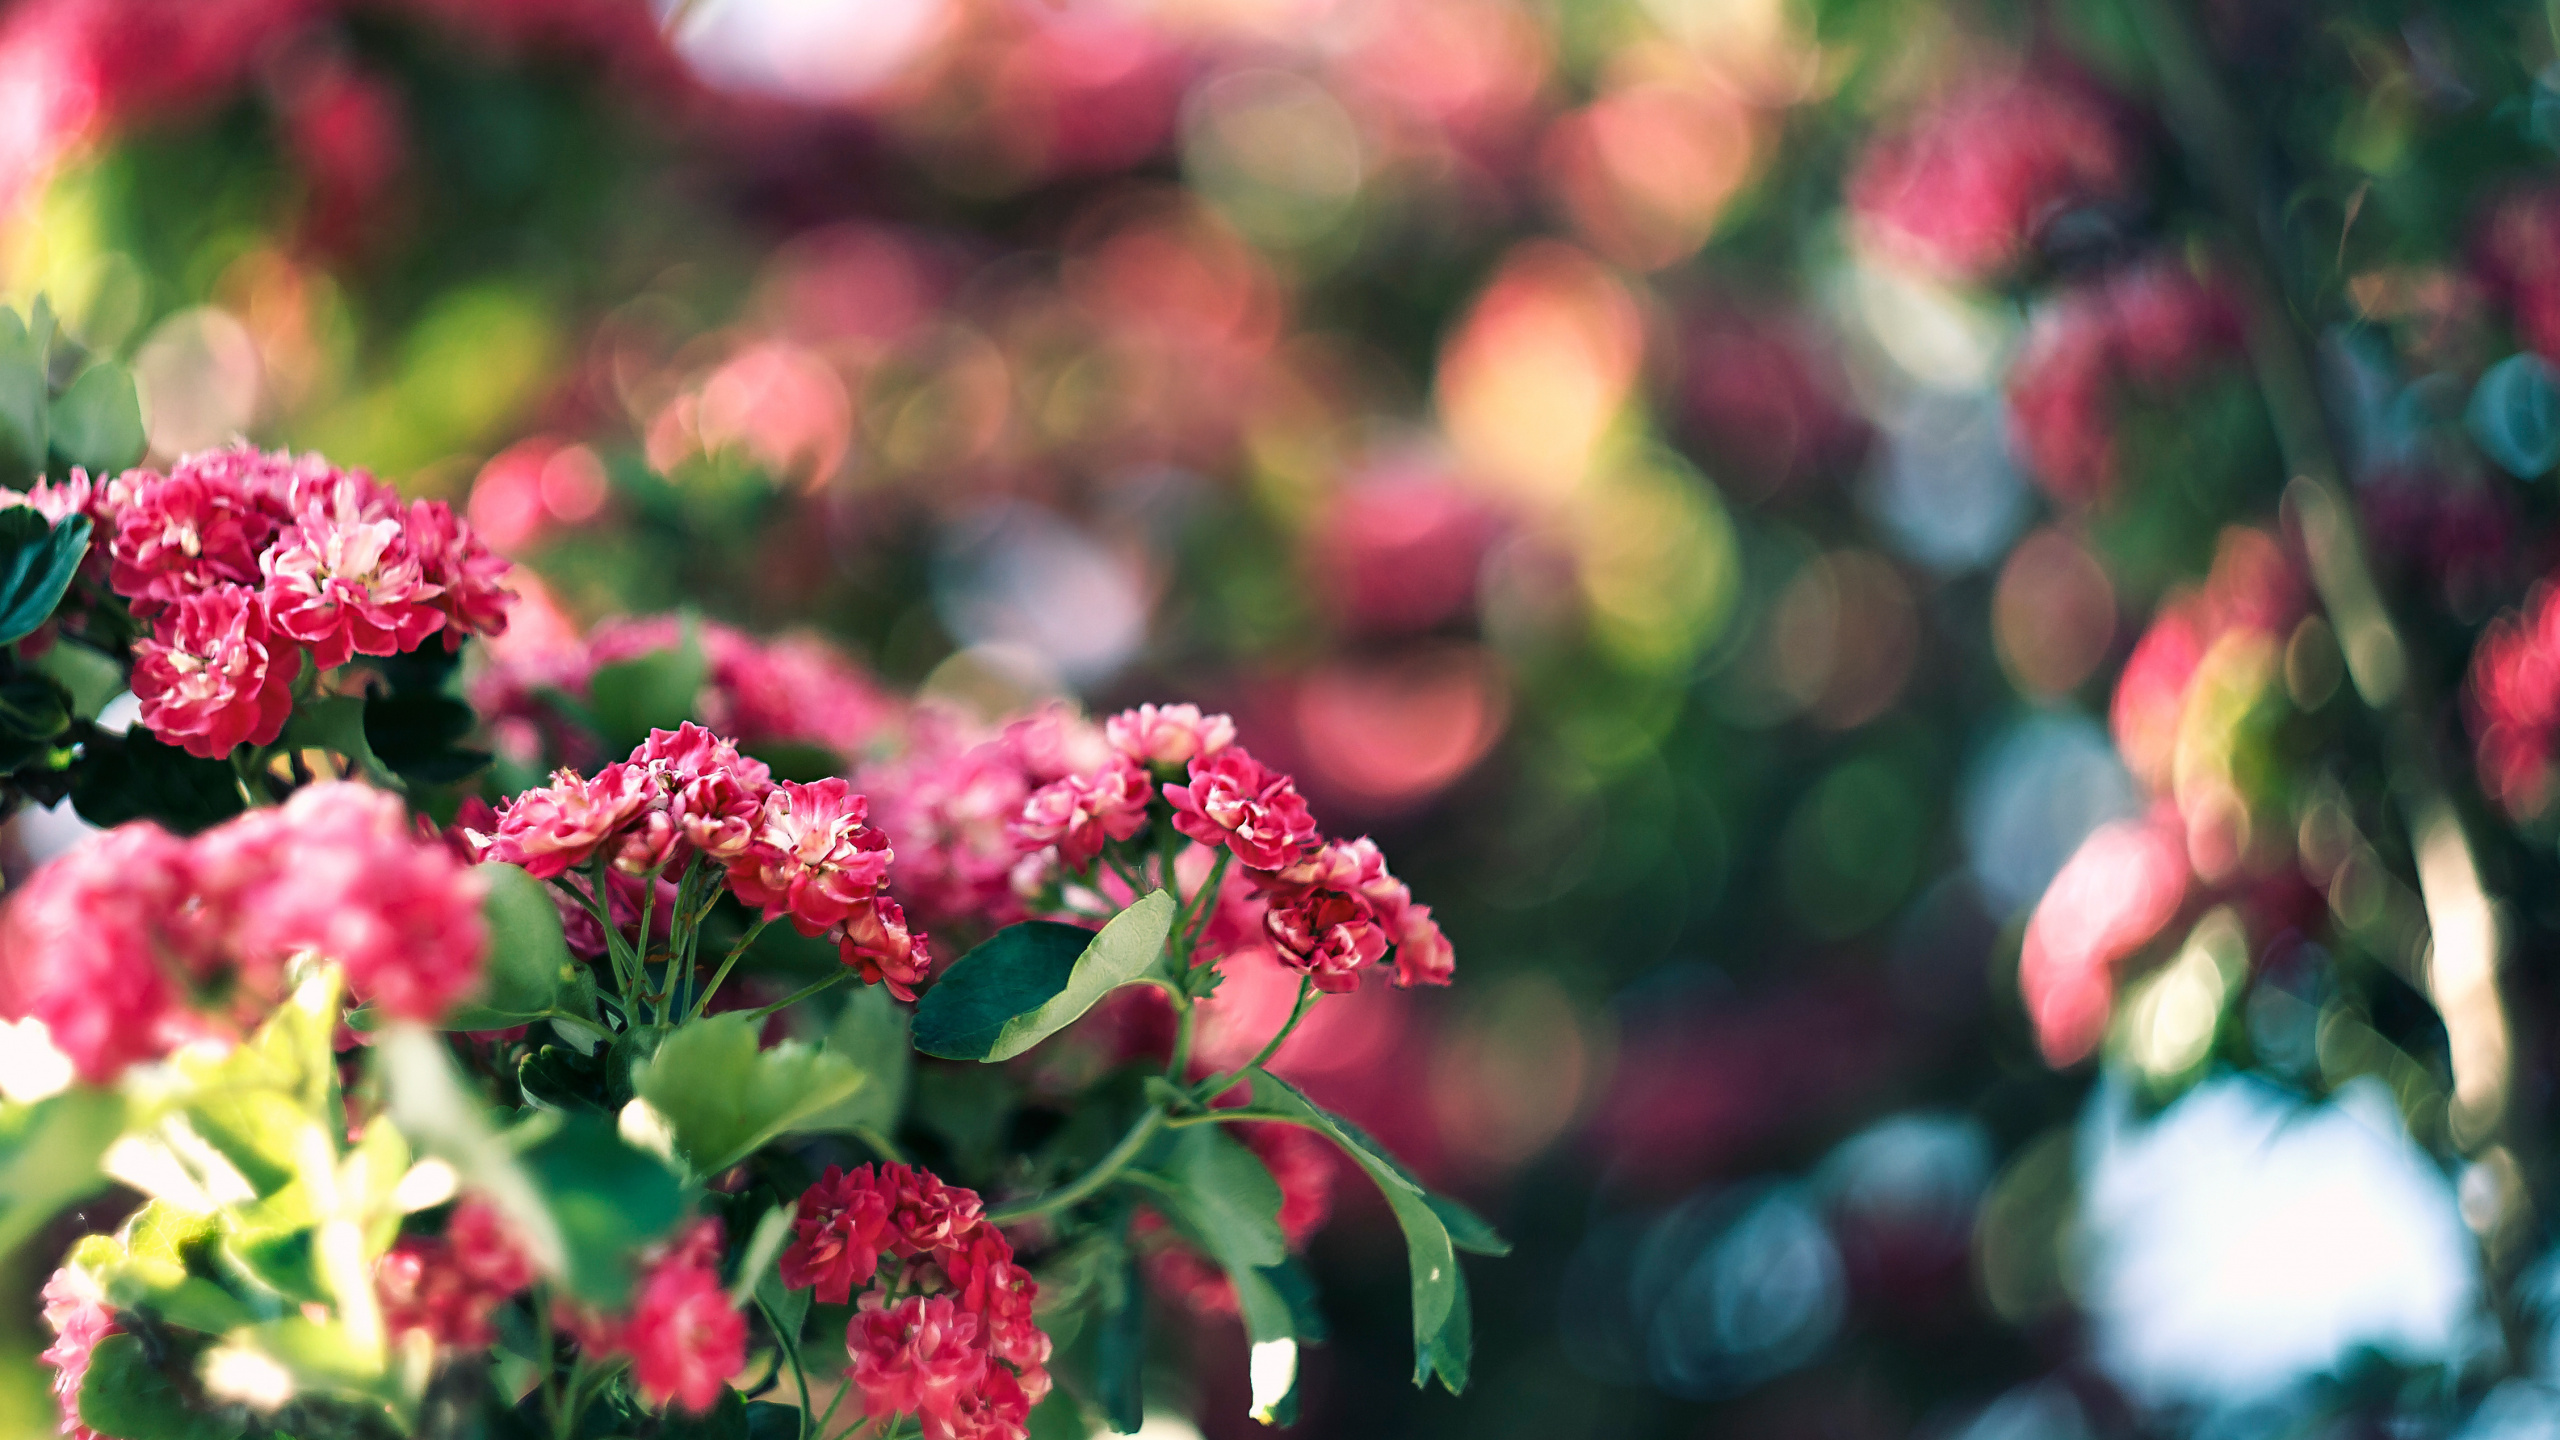 Pink and White Flowers in Tilt Shift Lens. Wallpaper in 2560x1440 Resolution